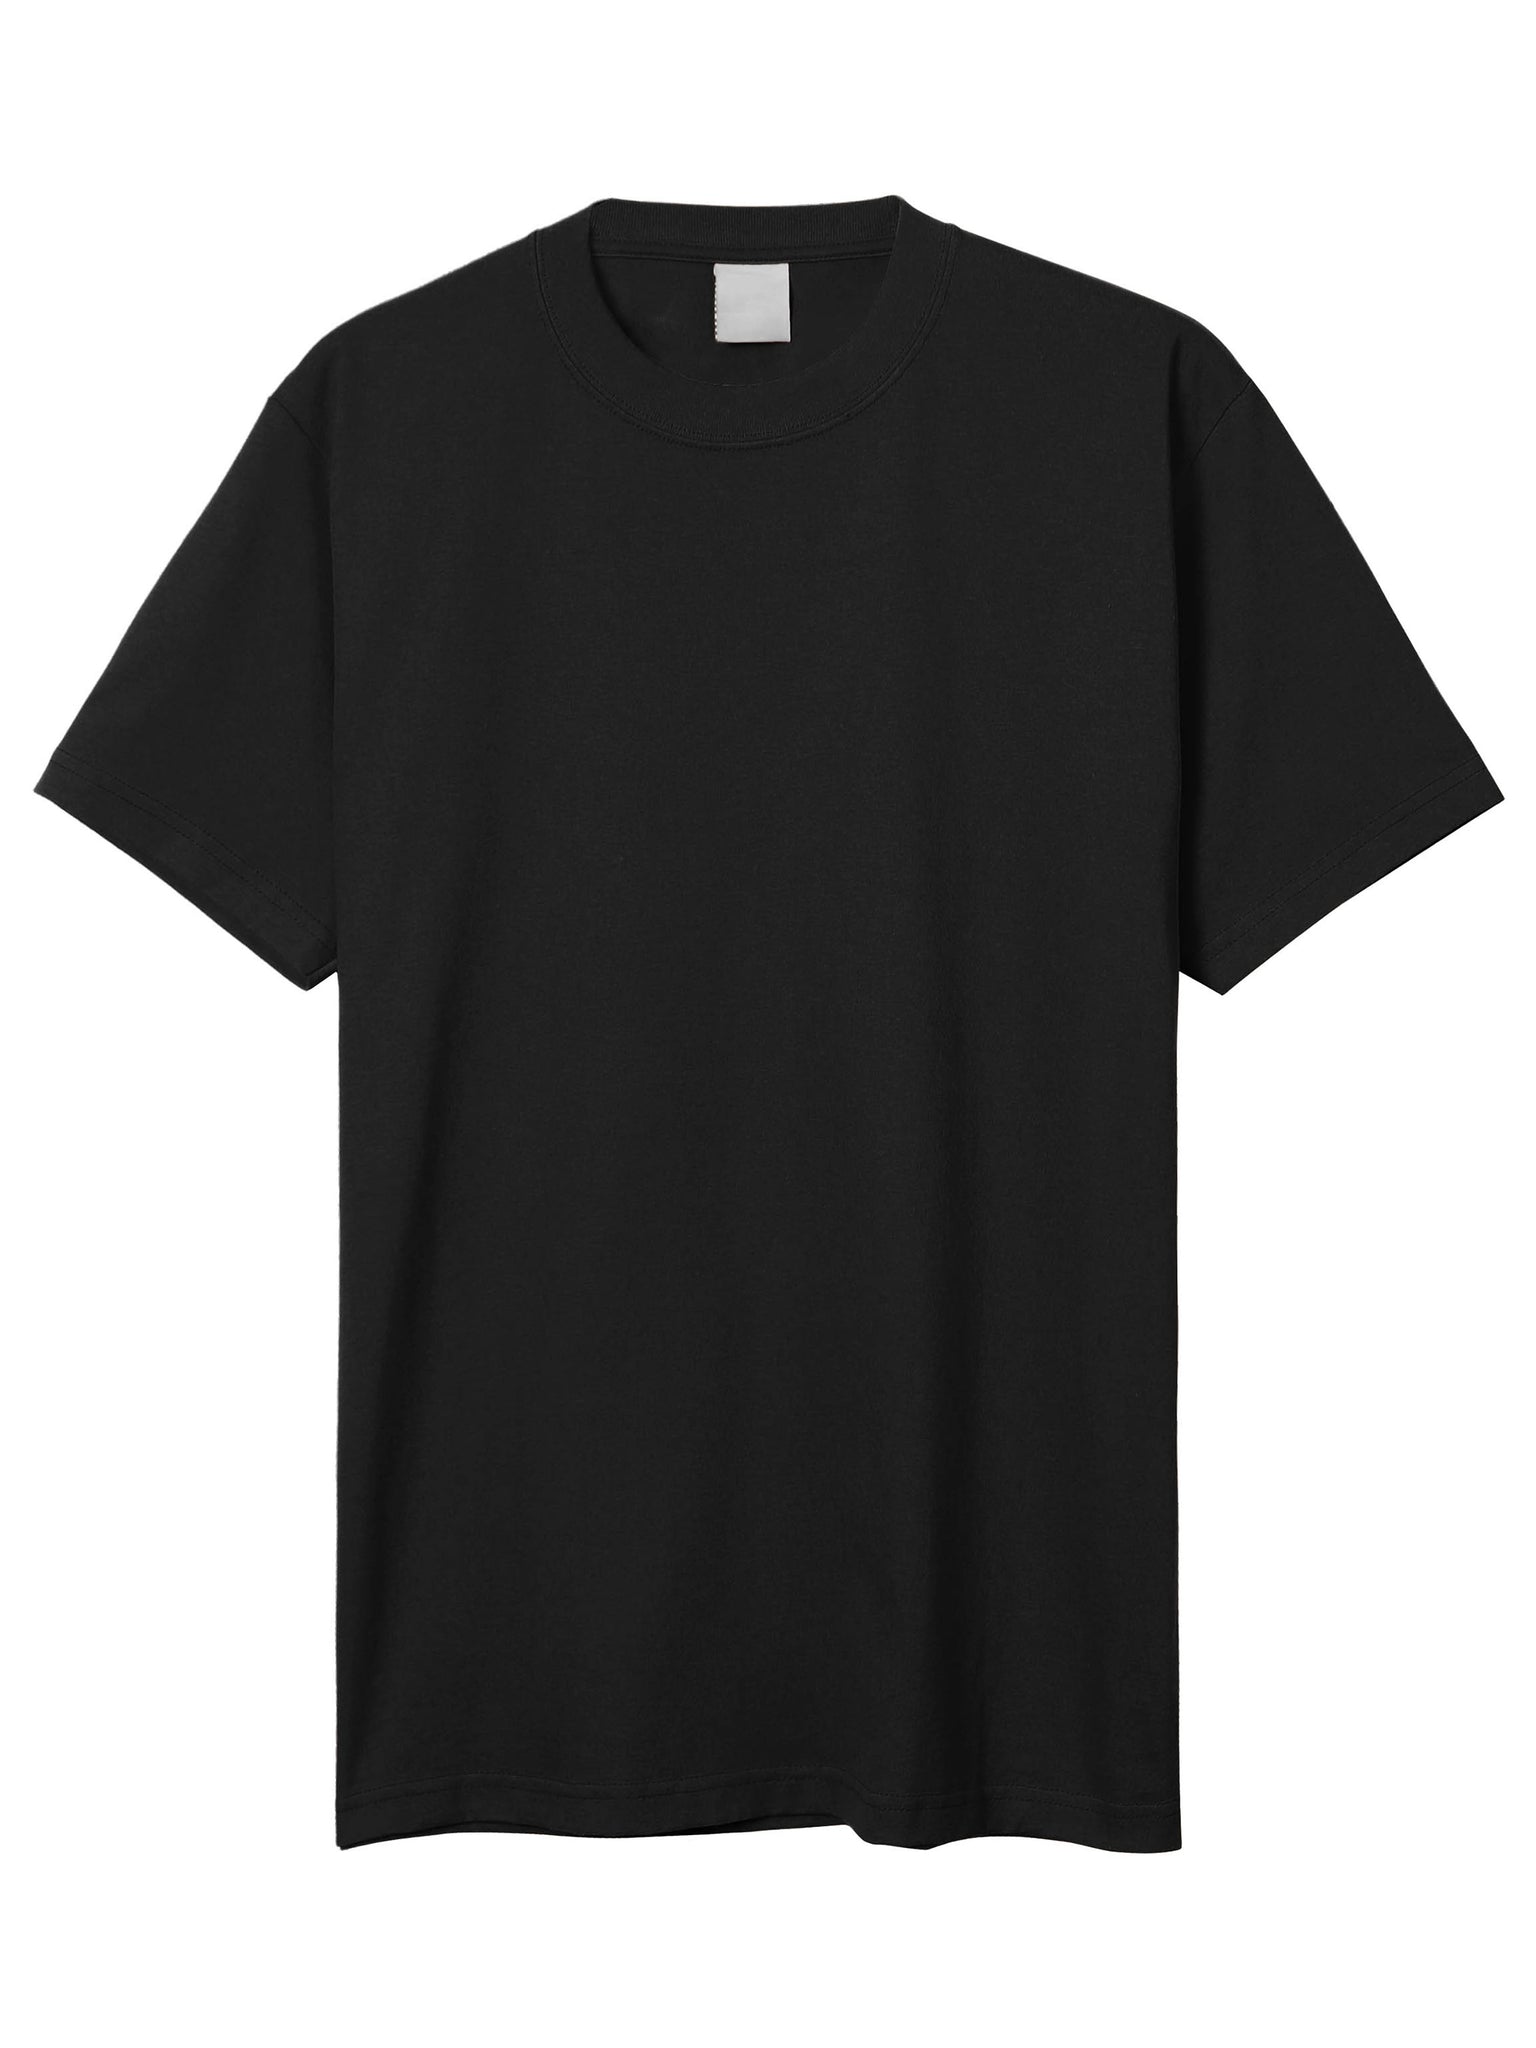 Men's Burnout T-Shirt - T-Shirts & Tank Tops